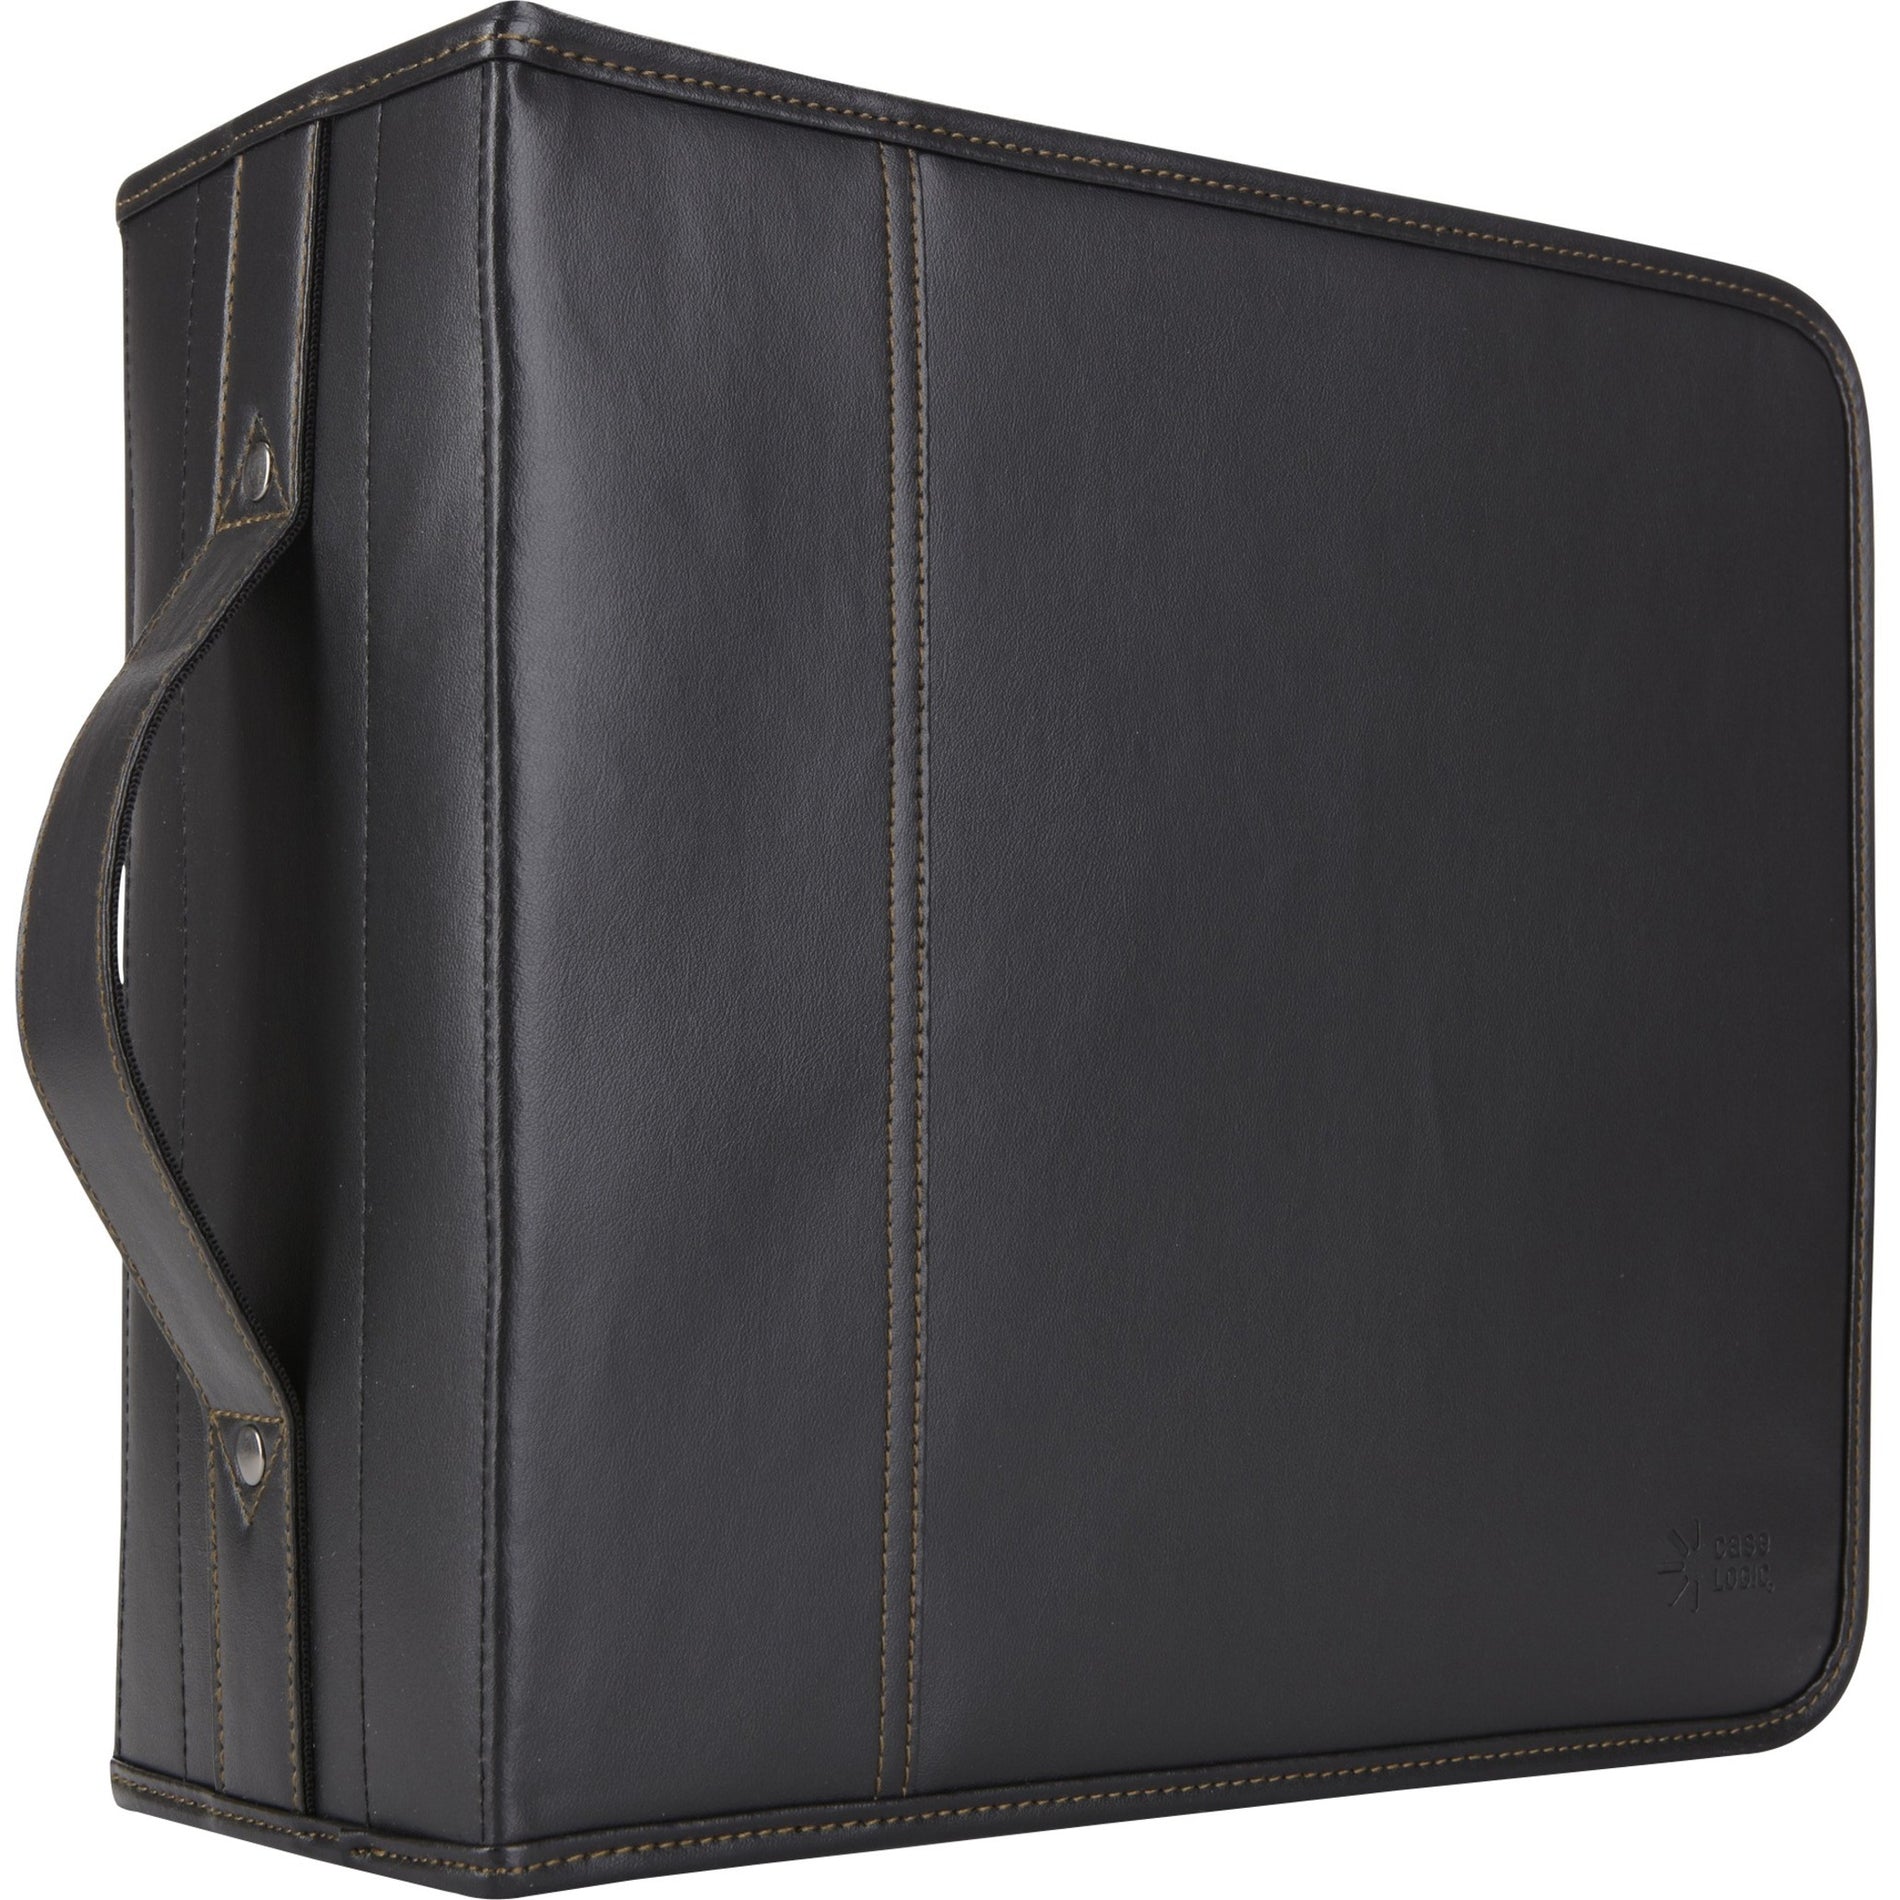 Case Logic 3200130 336 Capacity CD Wallet, Faux Leather, Black